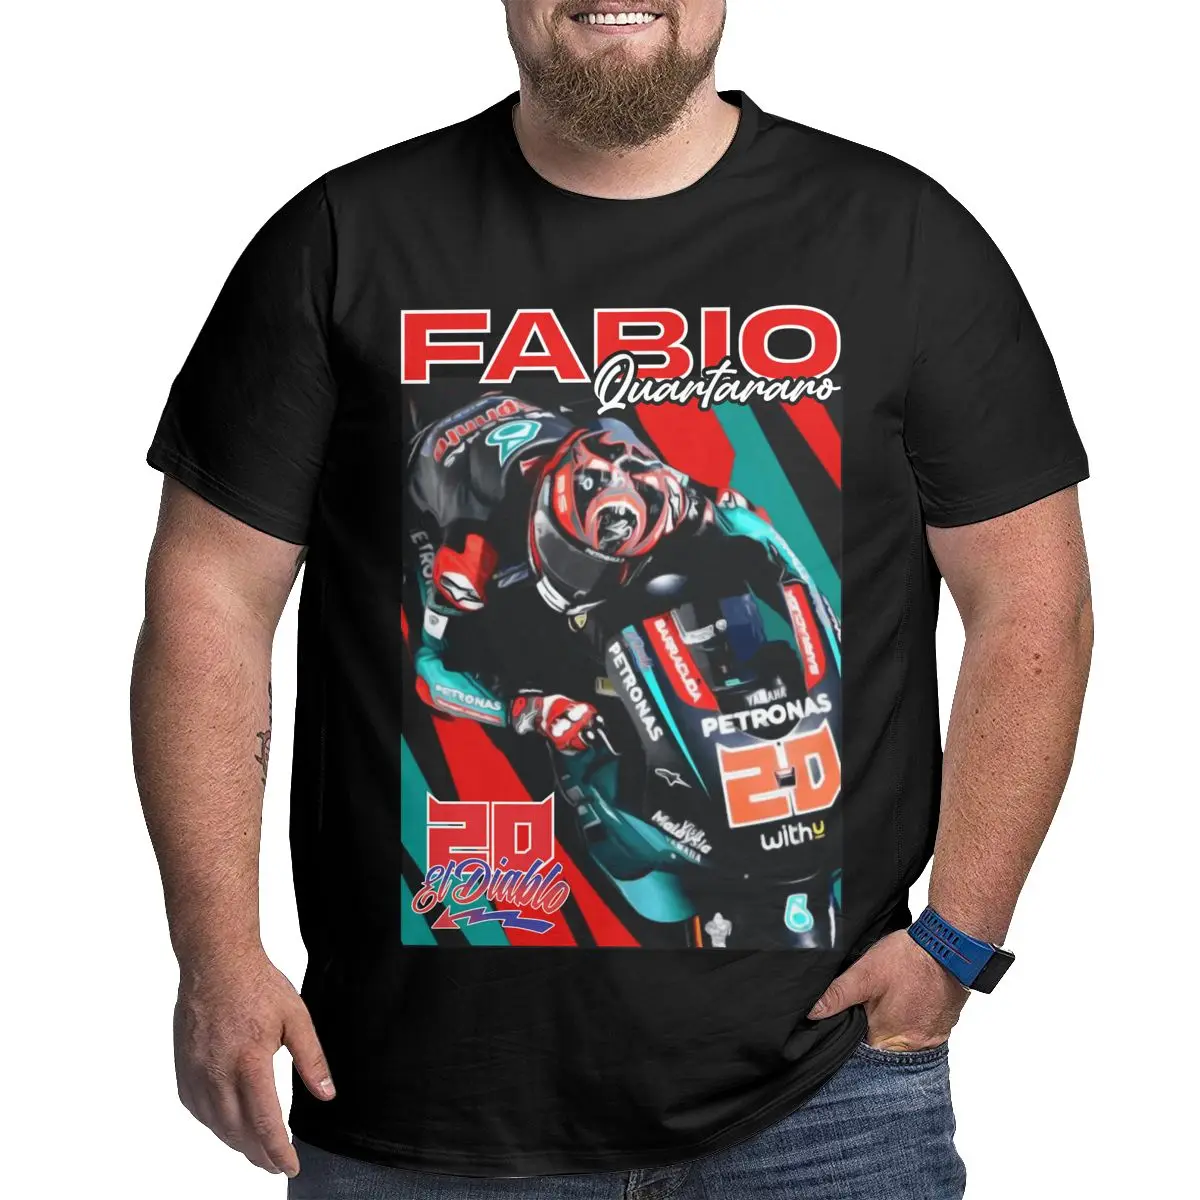 

Big Size T-shirt Fabio And Quartararo 20 Champion Geek motorcycle Funny Graphic Plus Size Big Tall Man Oversized Tops Tees